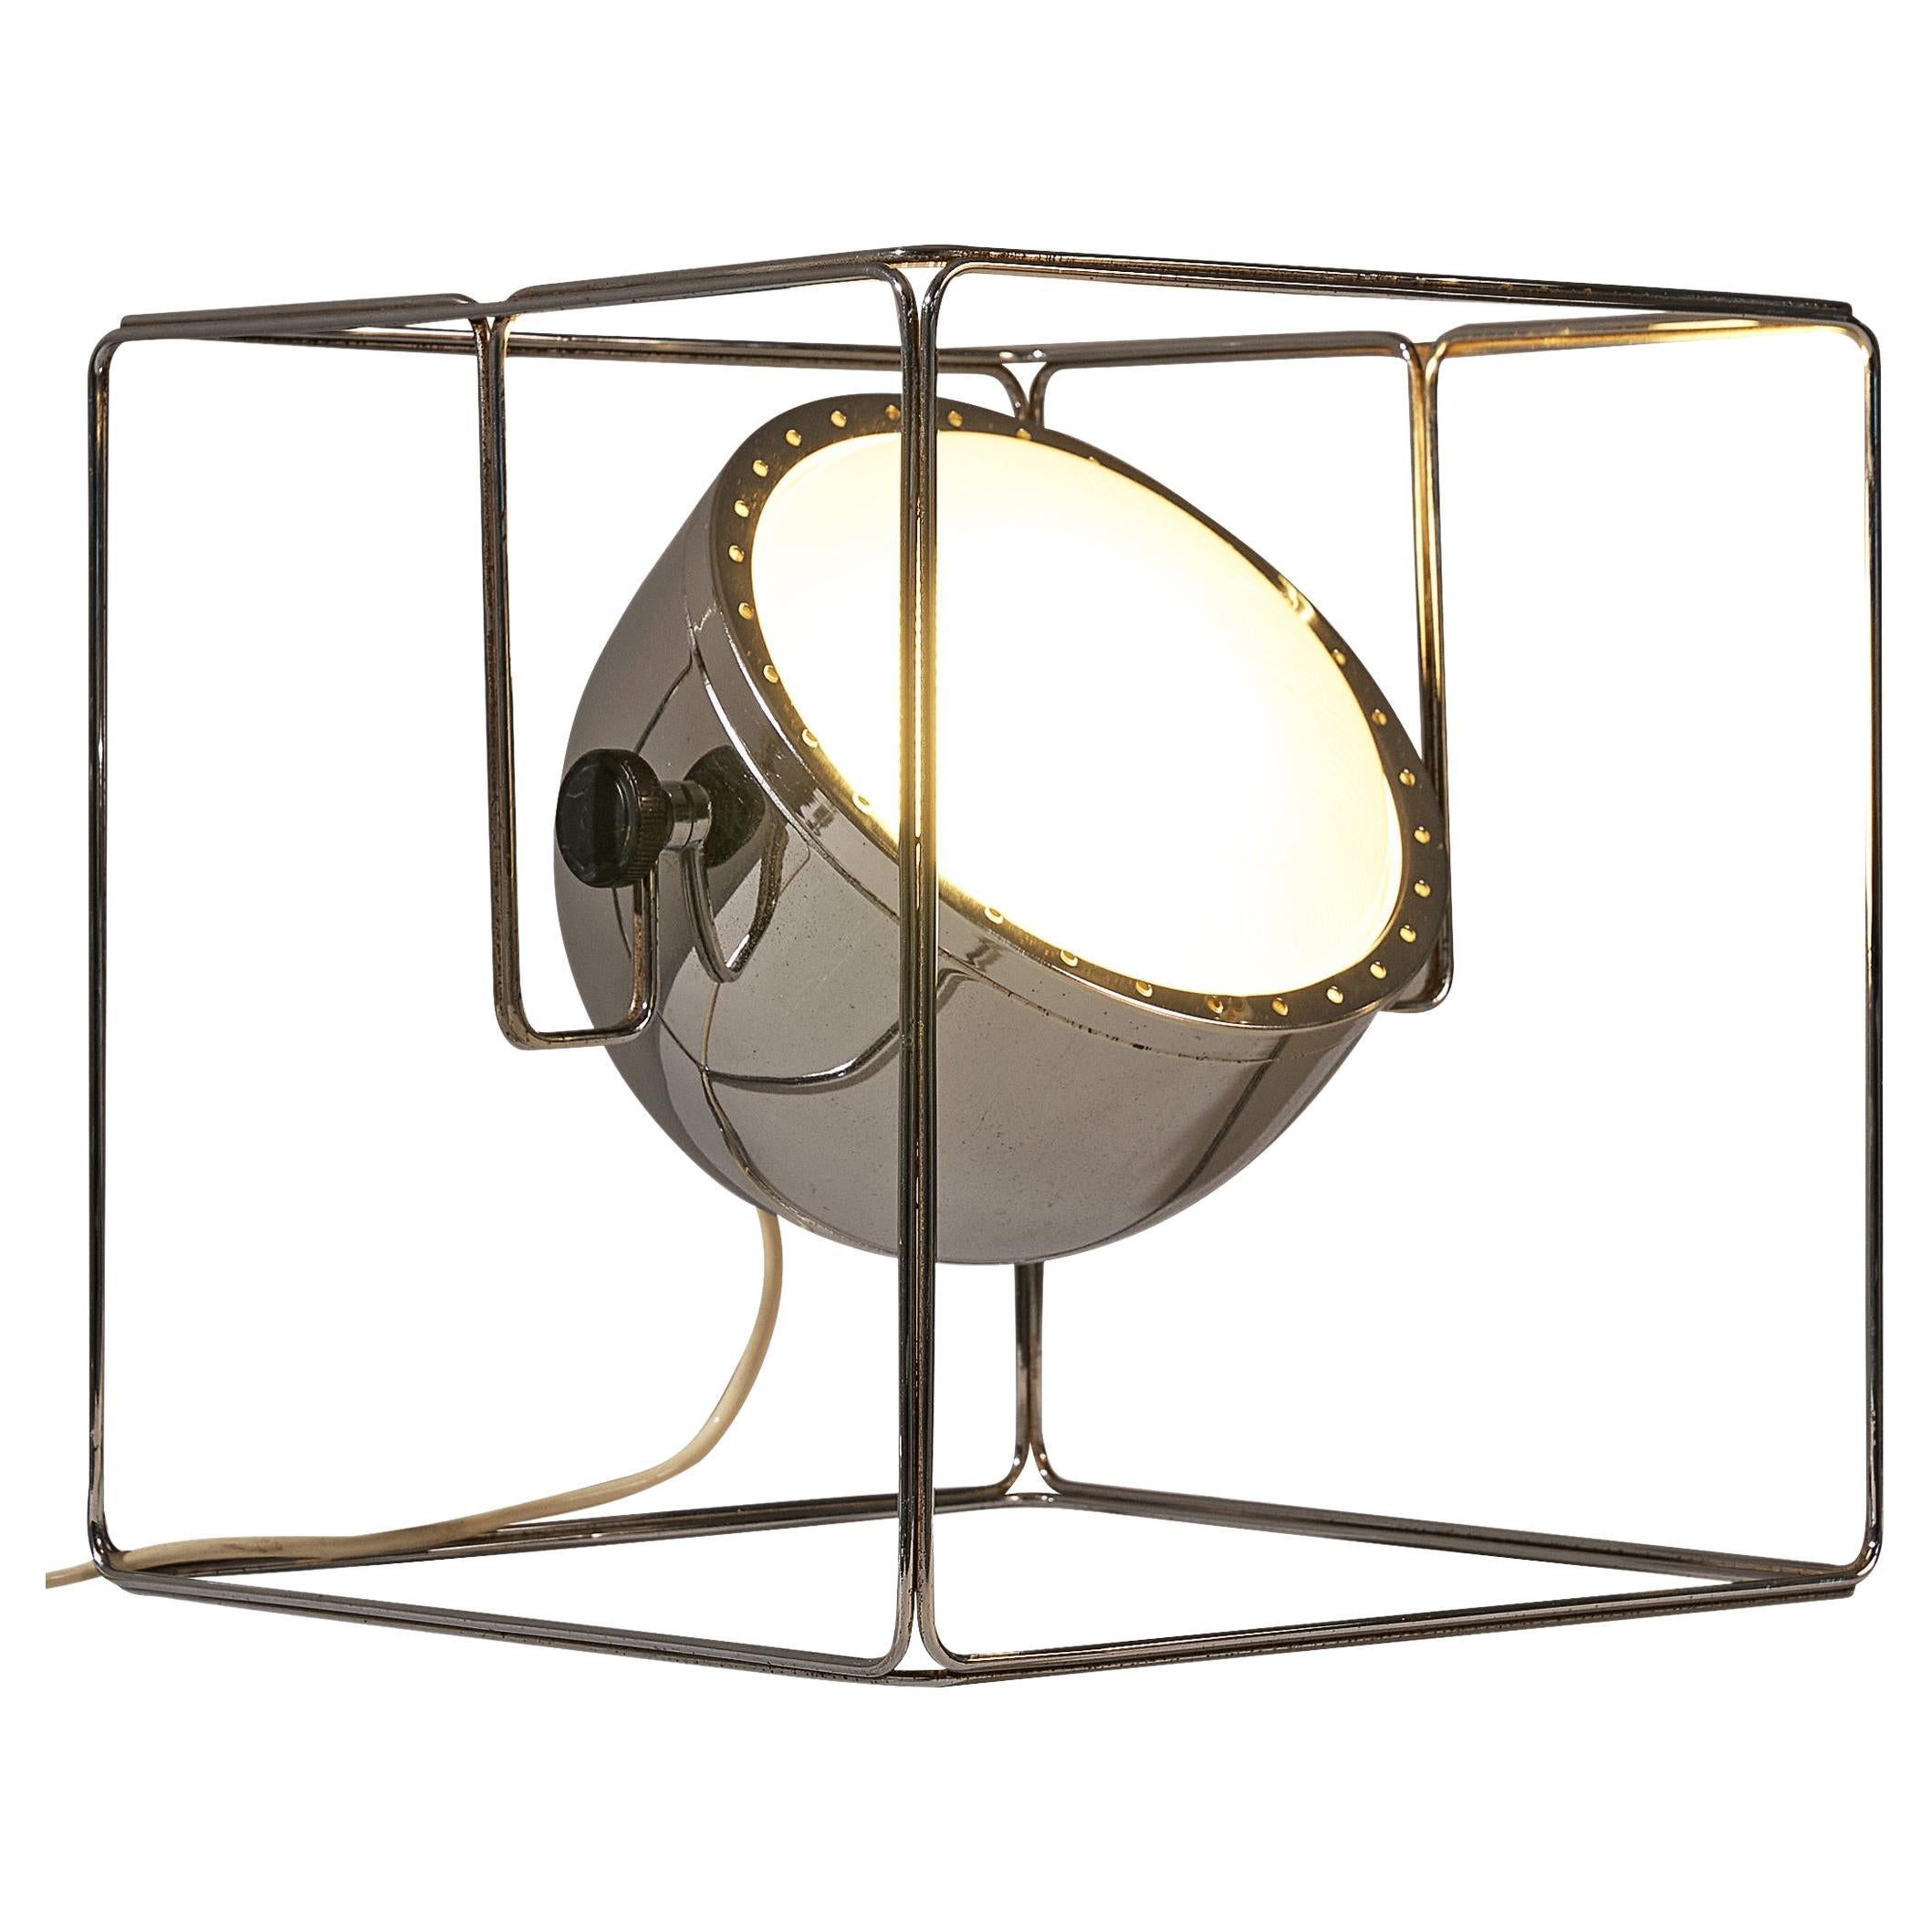 IDEA Studio Tecno Design for Luci Table Lamp in Chrome-Plated Steel